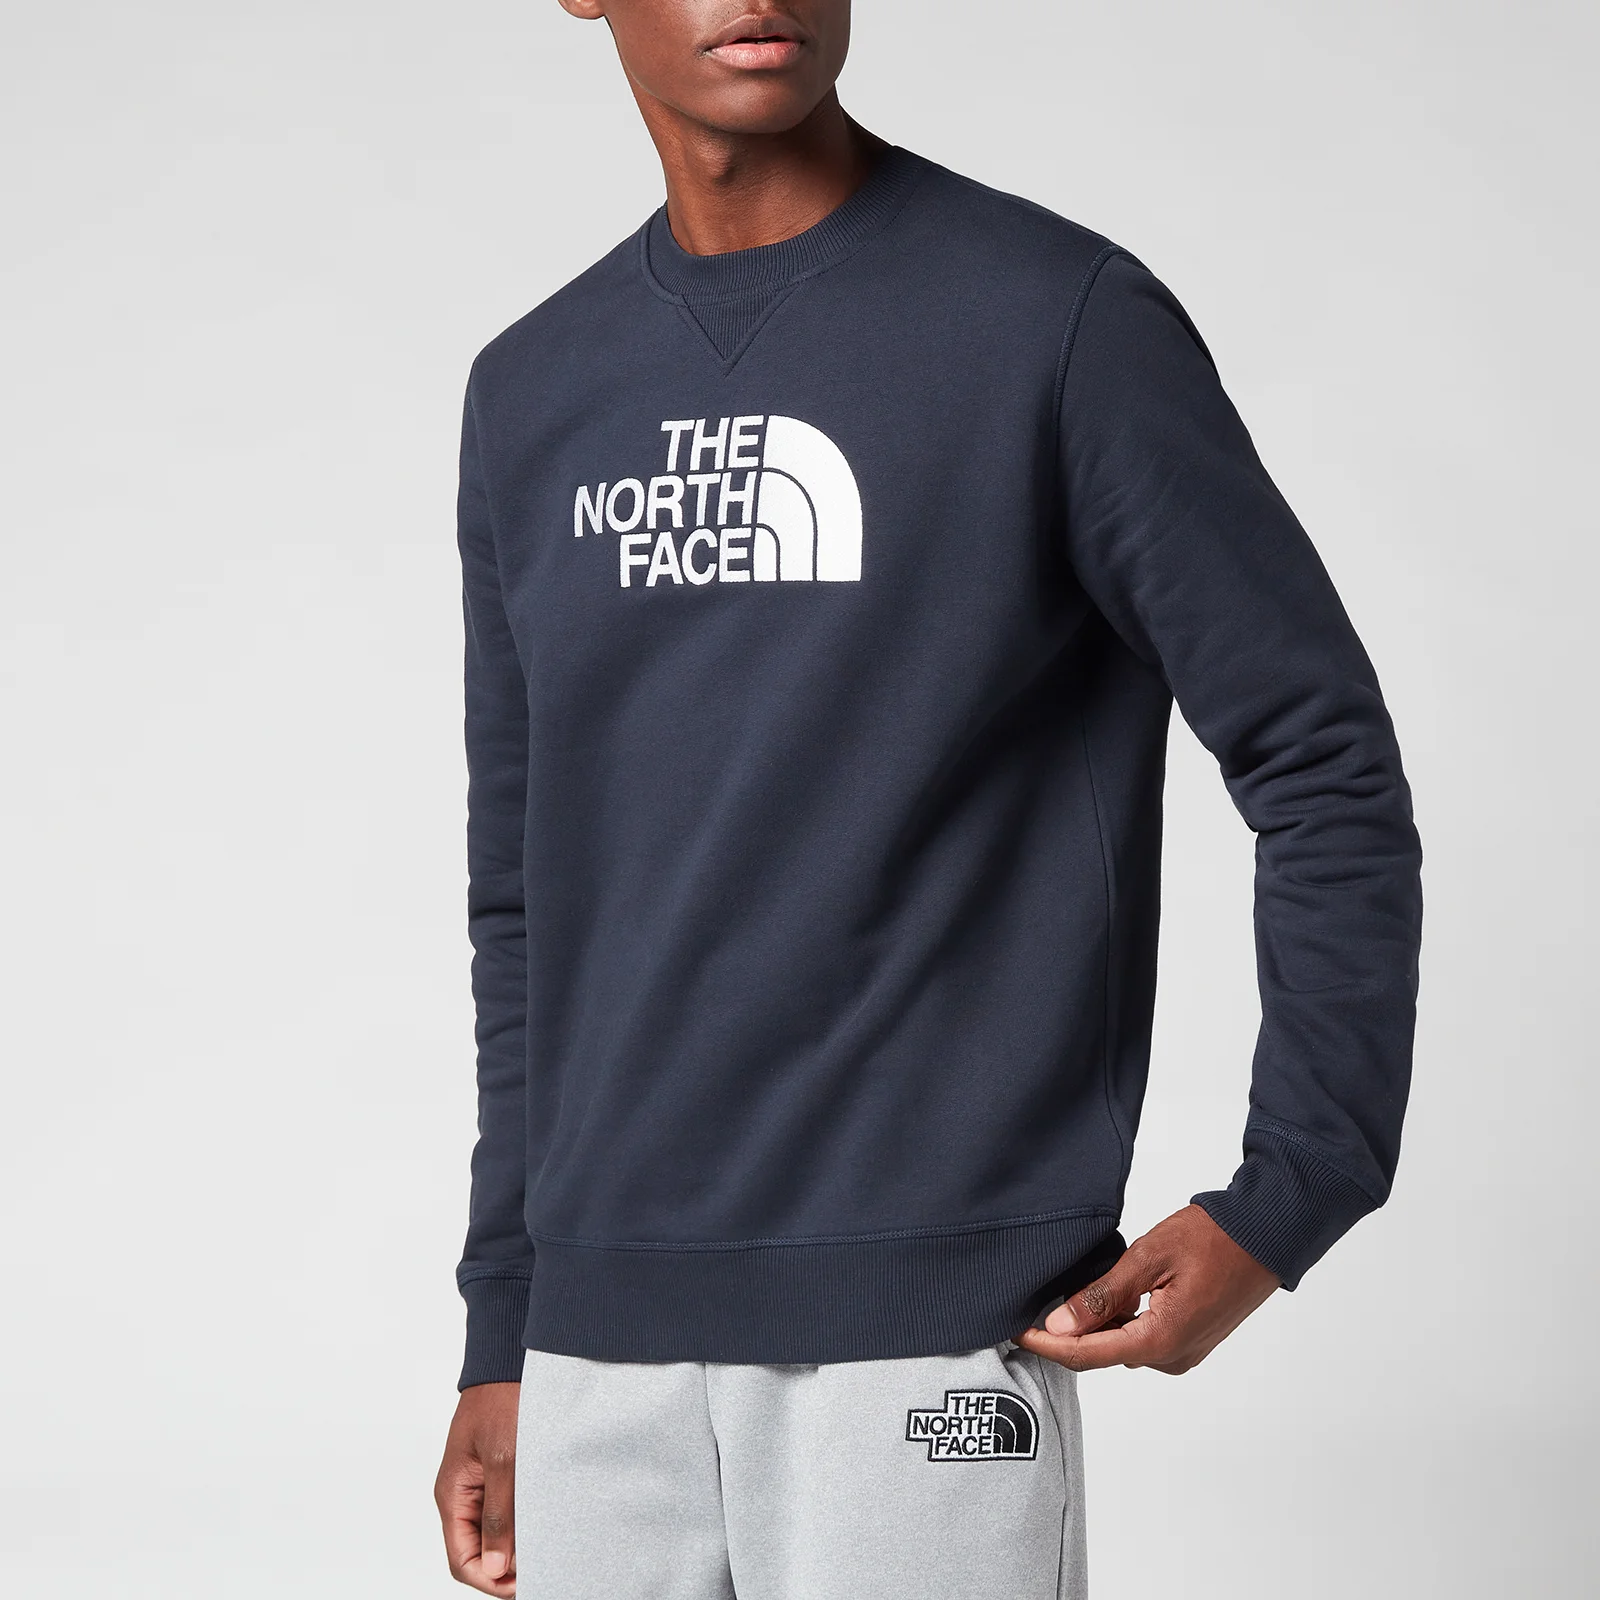 The North Face Men's Drew Peak Sweatshirt - Urban Navy Image 1